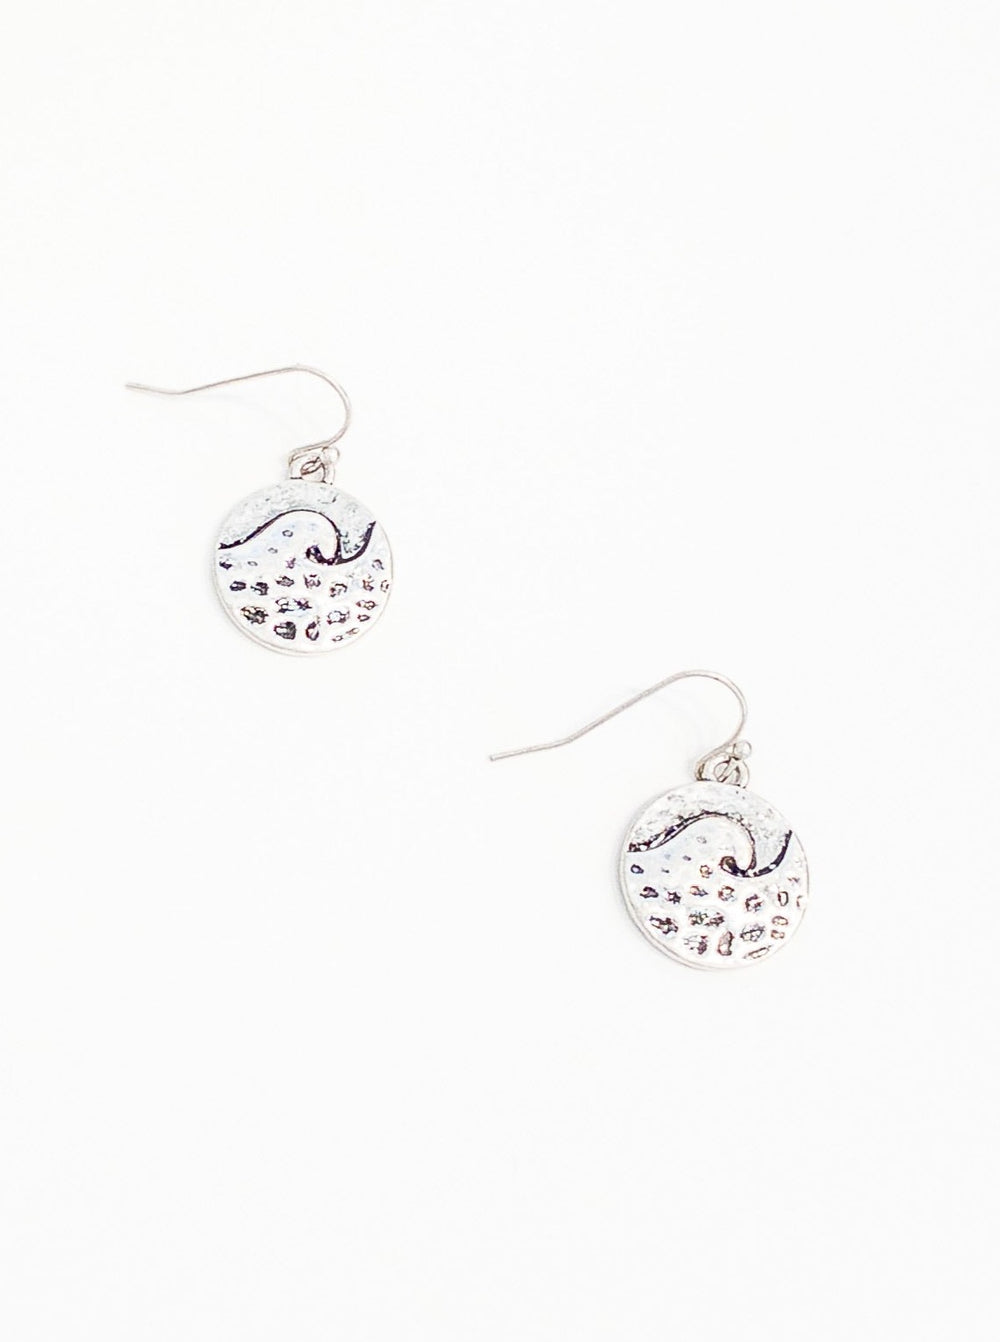 Silver wave engraved dangly earrings. Nickel Free. Length : 1 1/4"